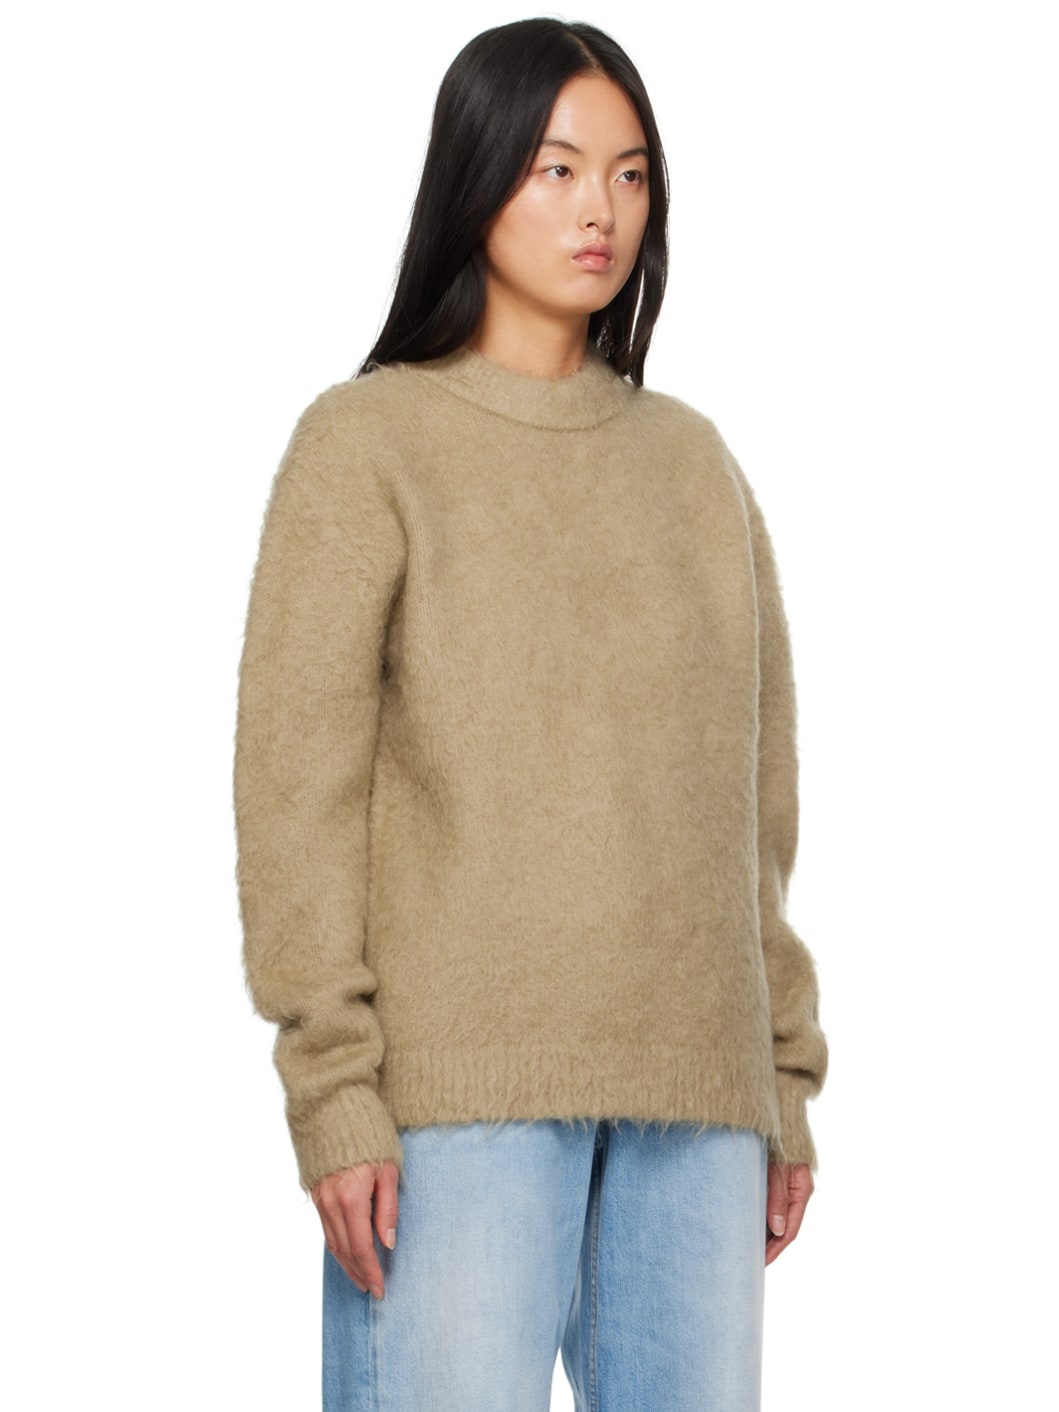 Beige Crewneck Sweater - 2